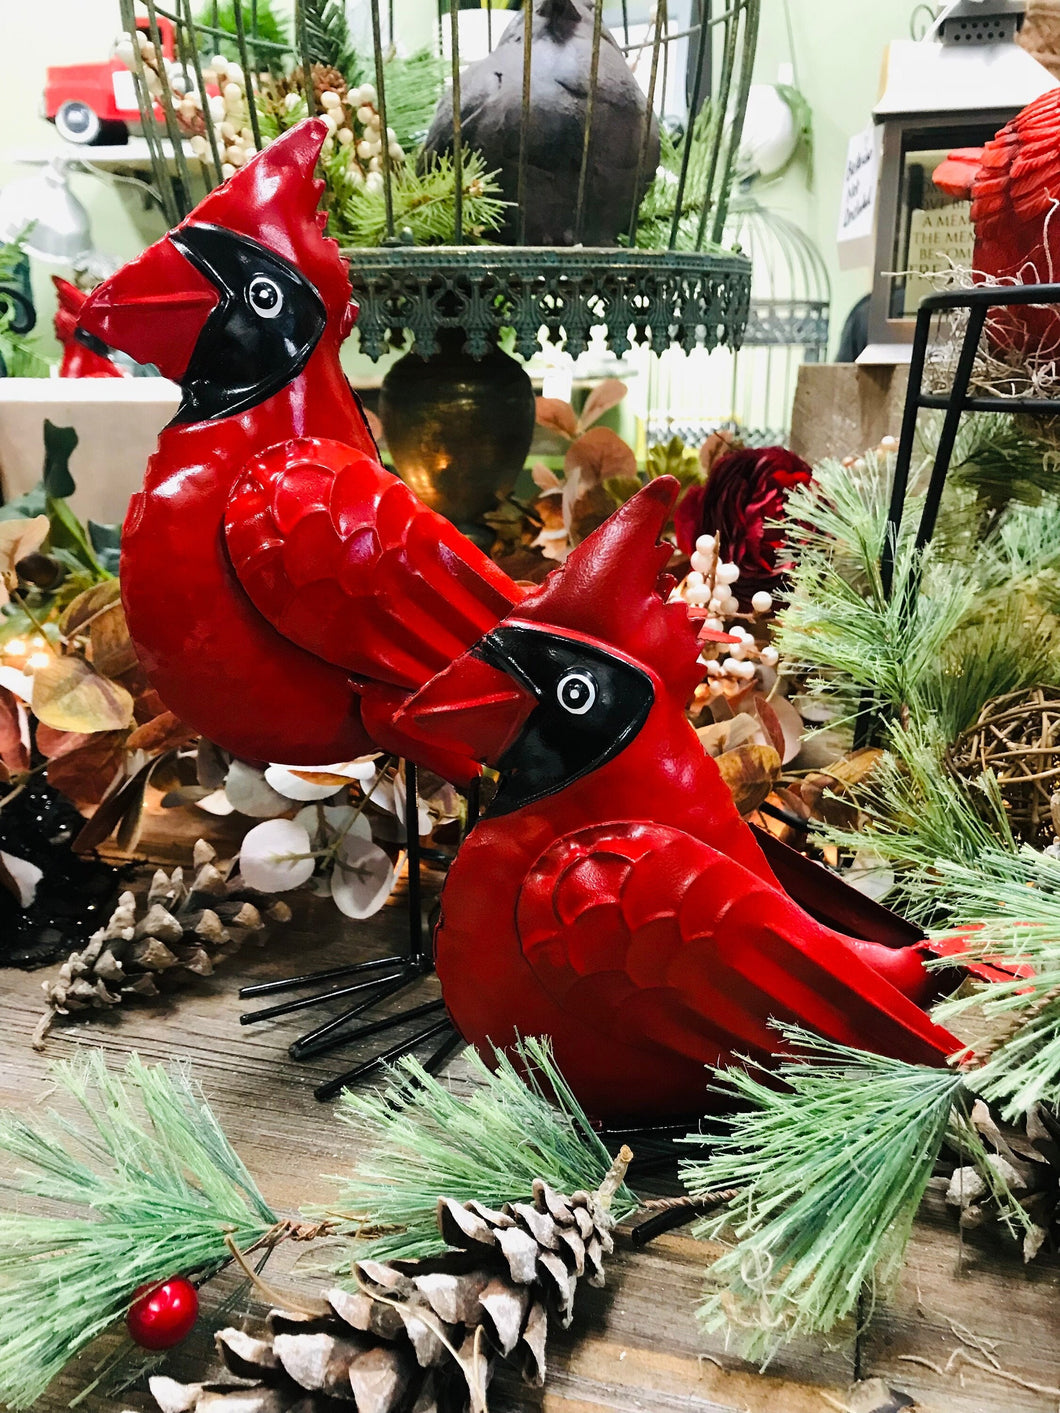 Metal red cardinal statue | standing or sitting cardinal figurine indoor outdoor garden art decor | cardinal lover's gift present